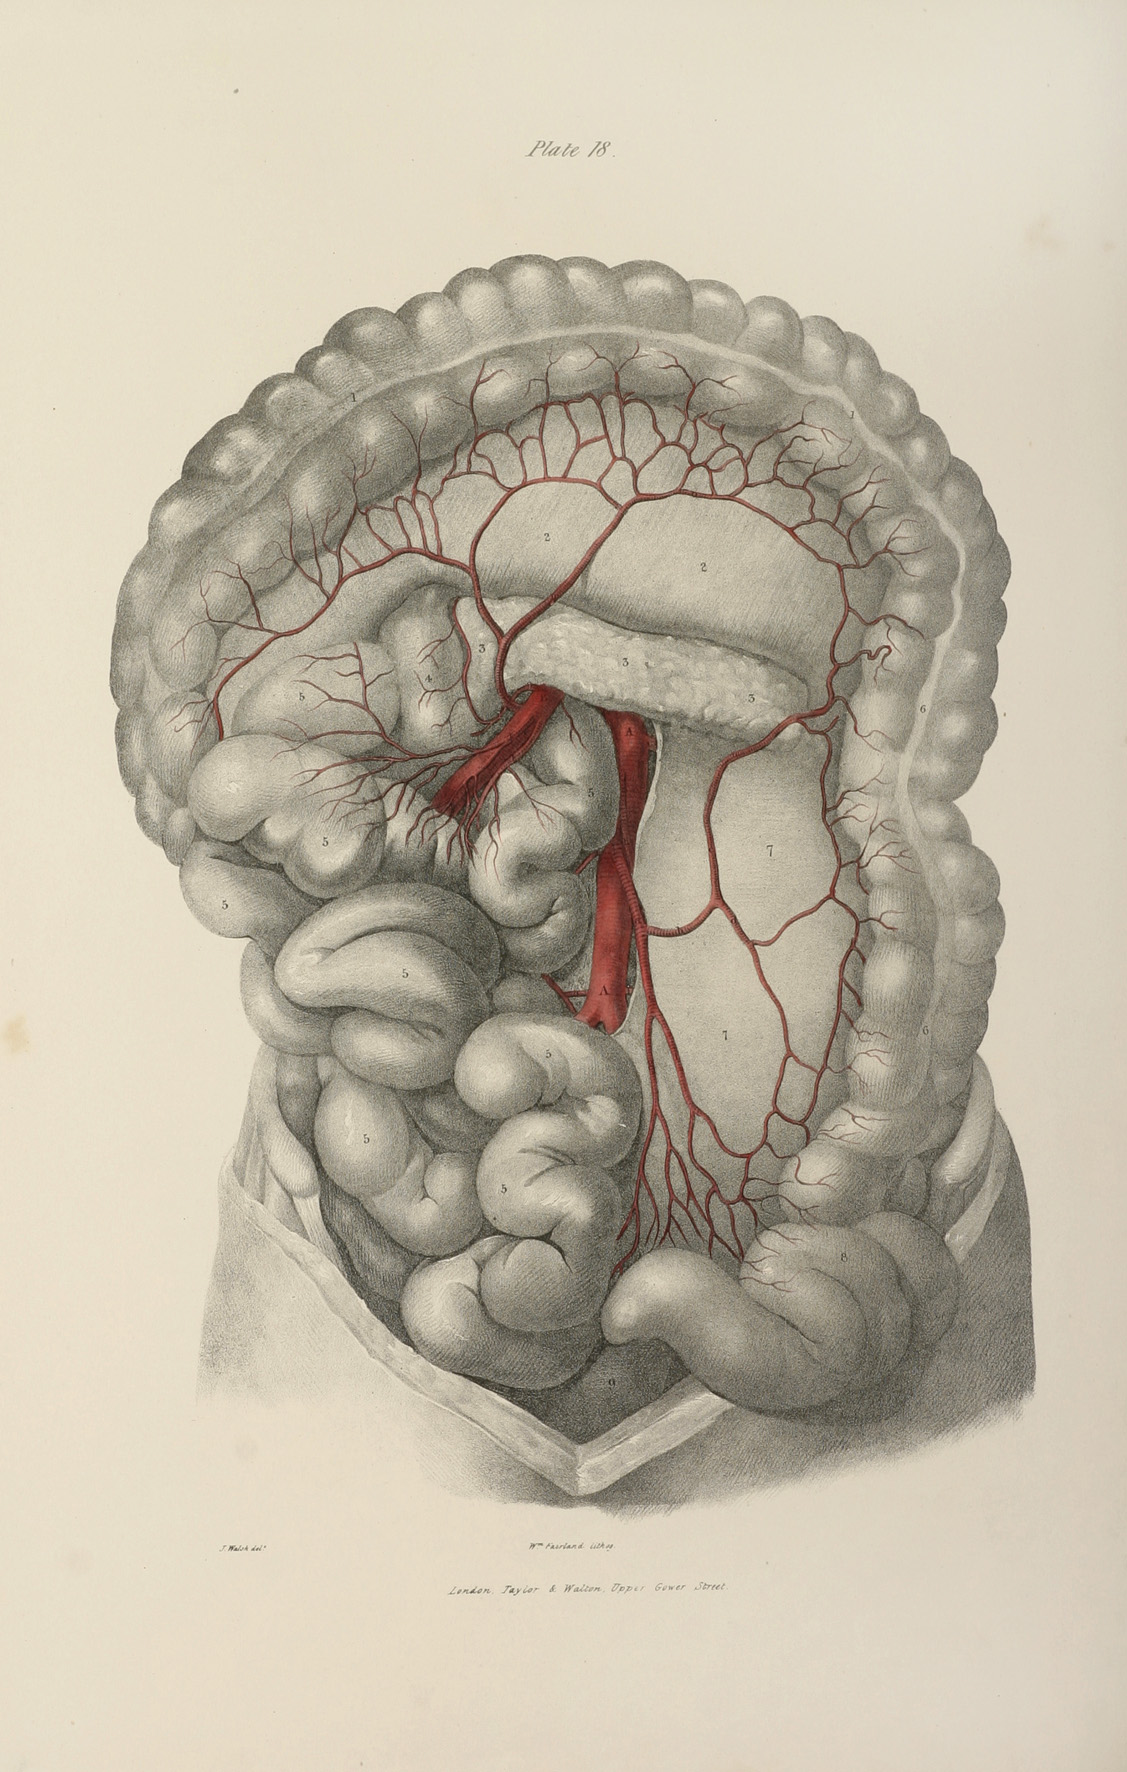 Inferior Mesenteric Artery - Antique Print from 1838